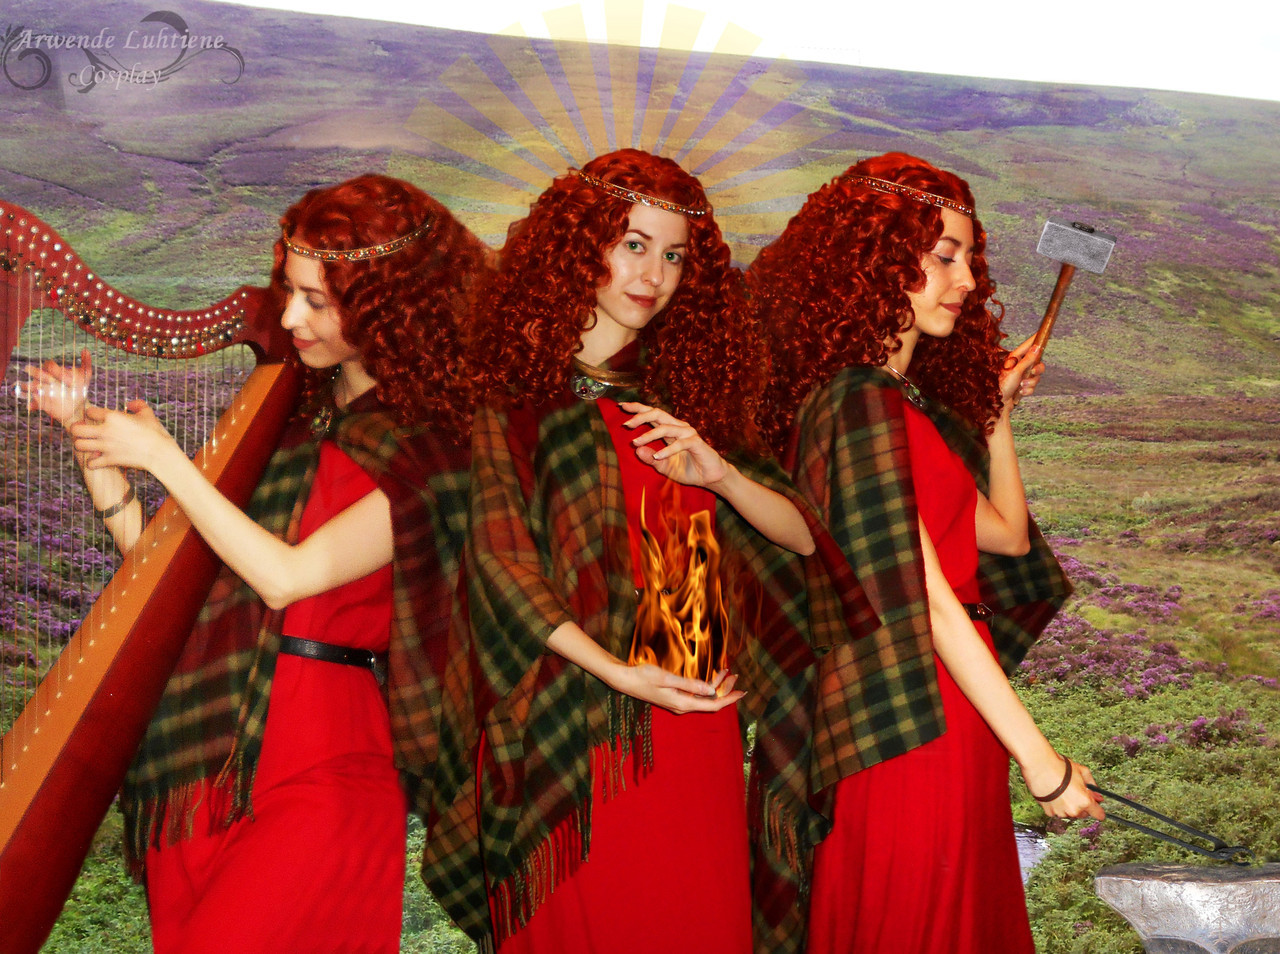 The Aeternal Swirling Fight Celtic Goddesses Brighid Part